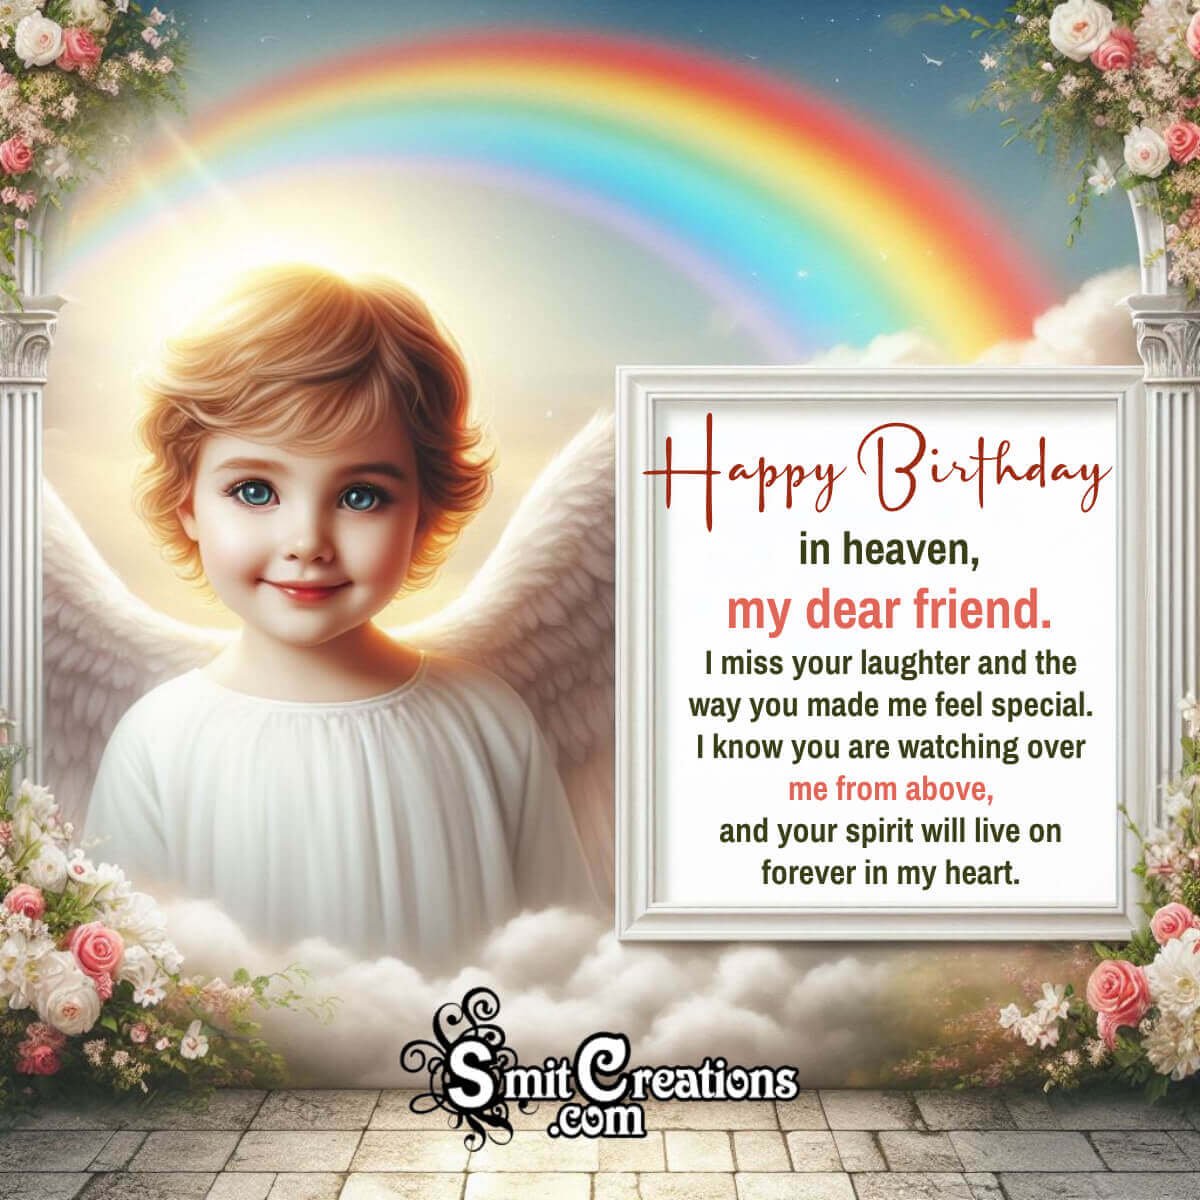 Heavenly Birthday Wish Image For Dear Friend